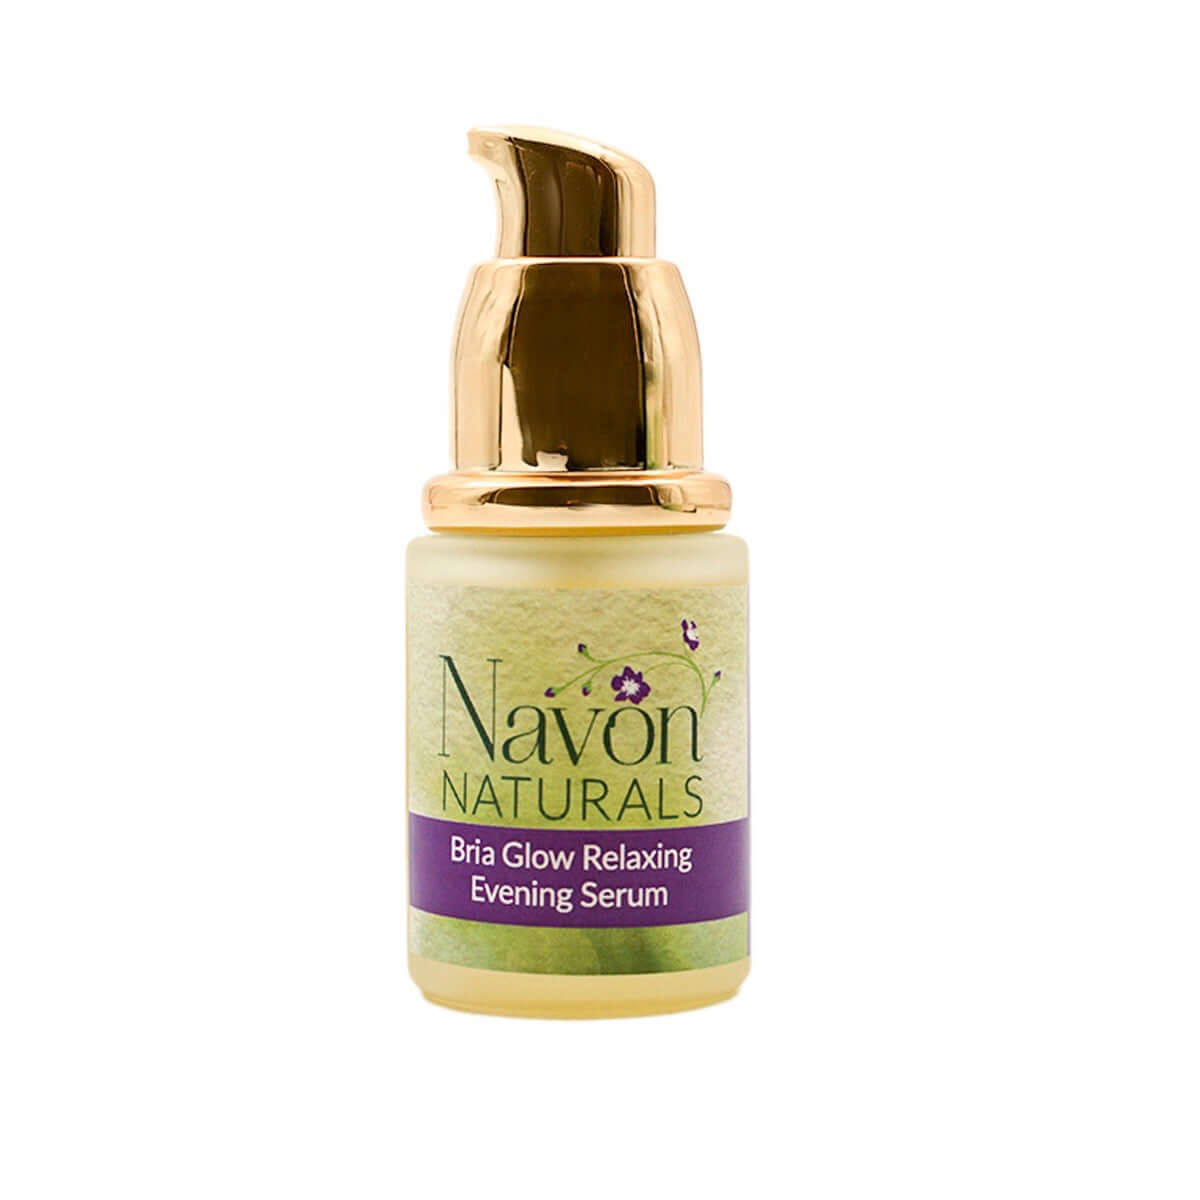 Bria Glow Relaxing Evening Serum - Navon Naturals Skincare